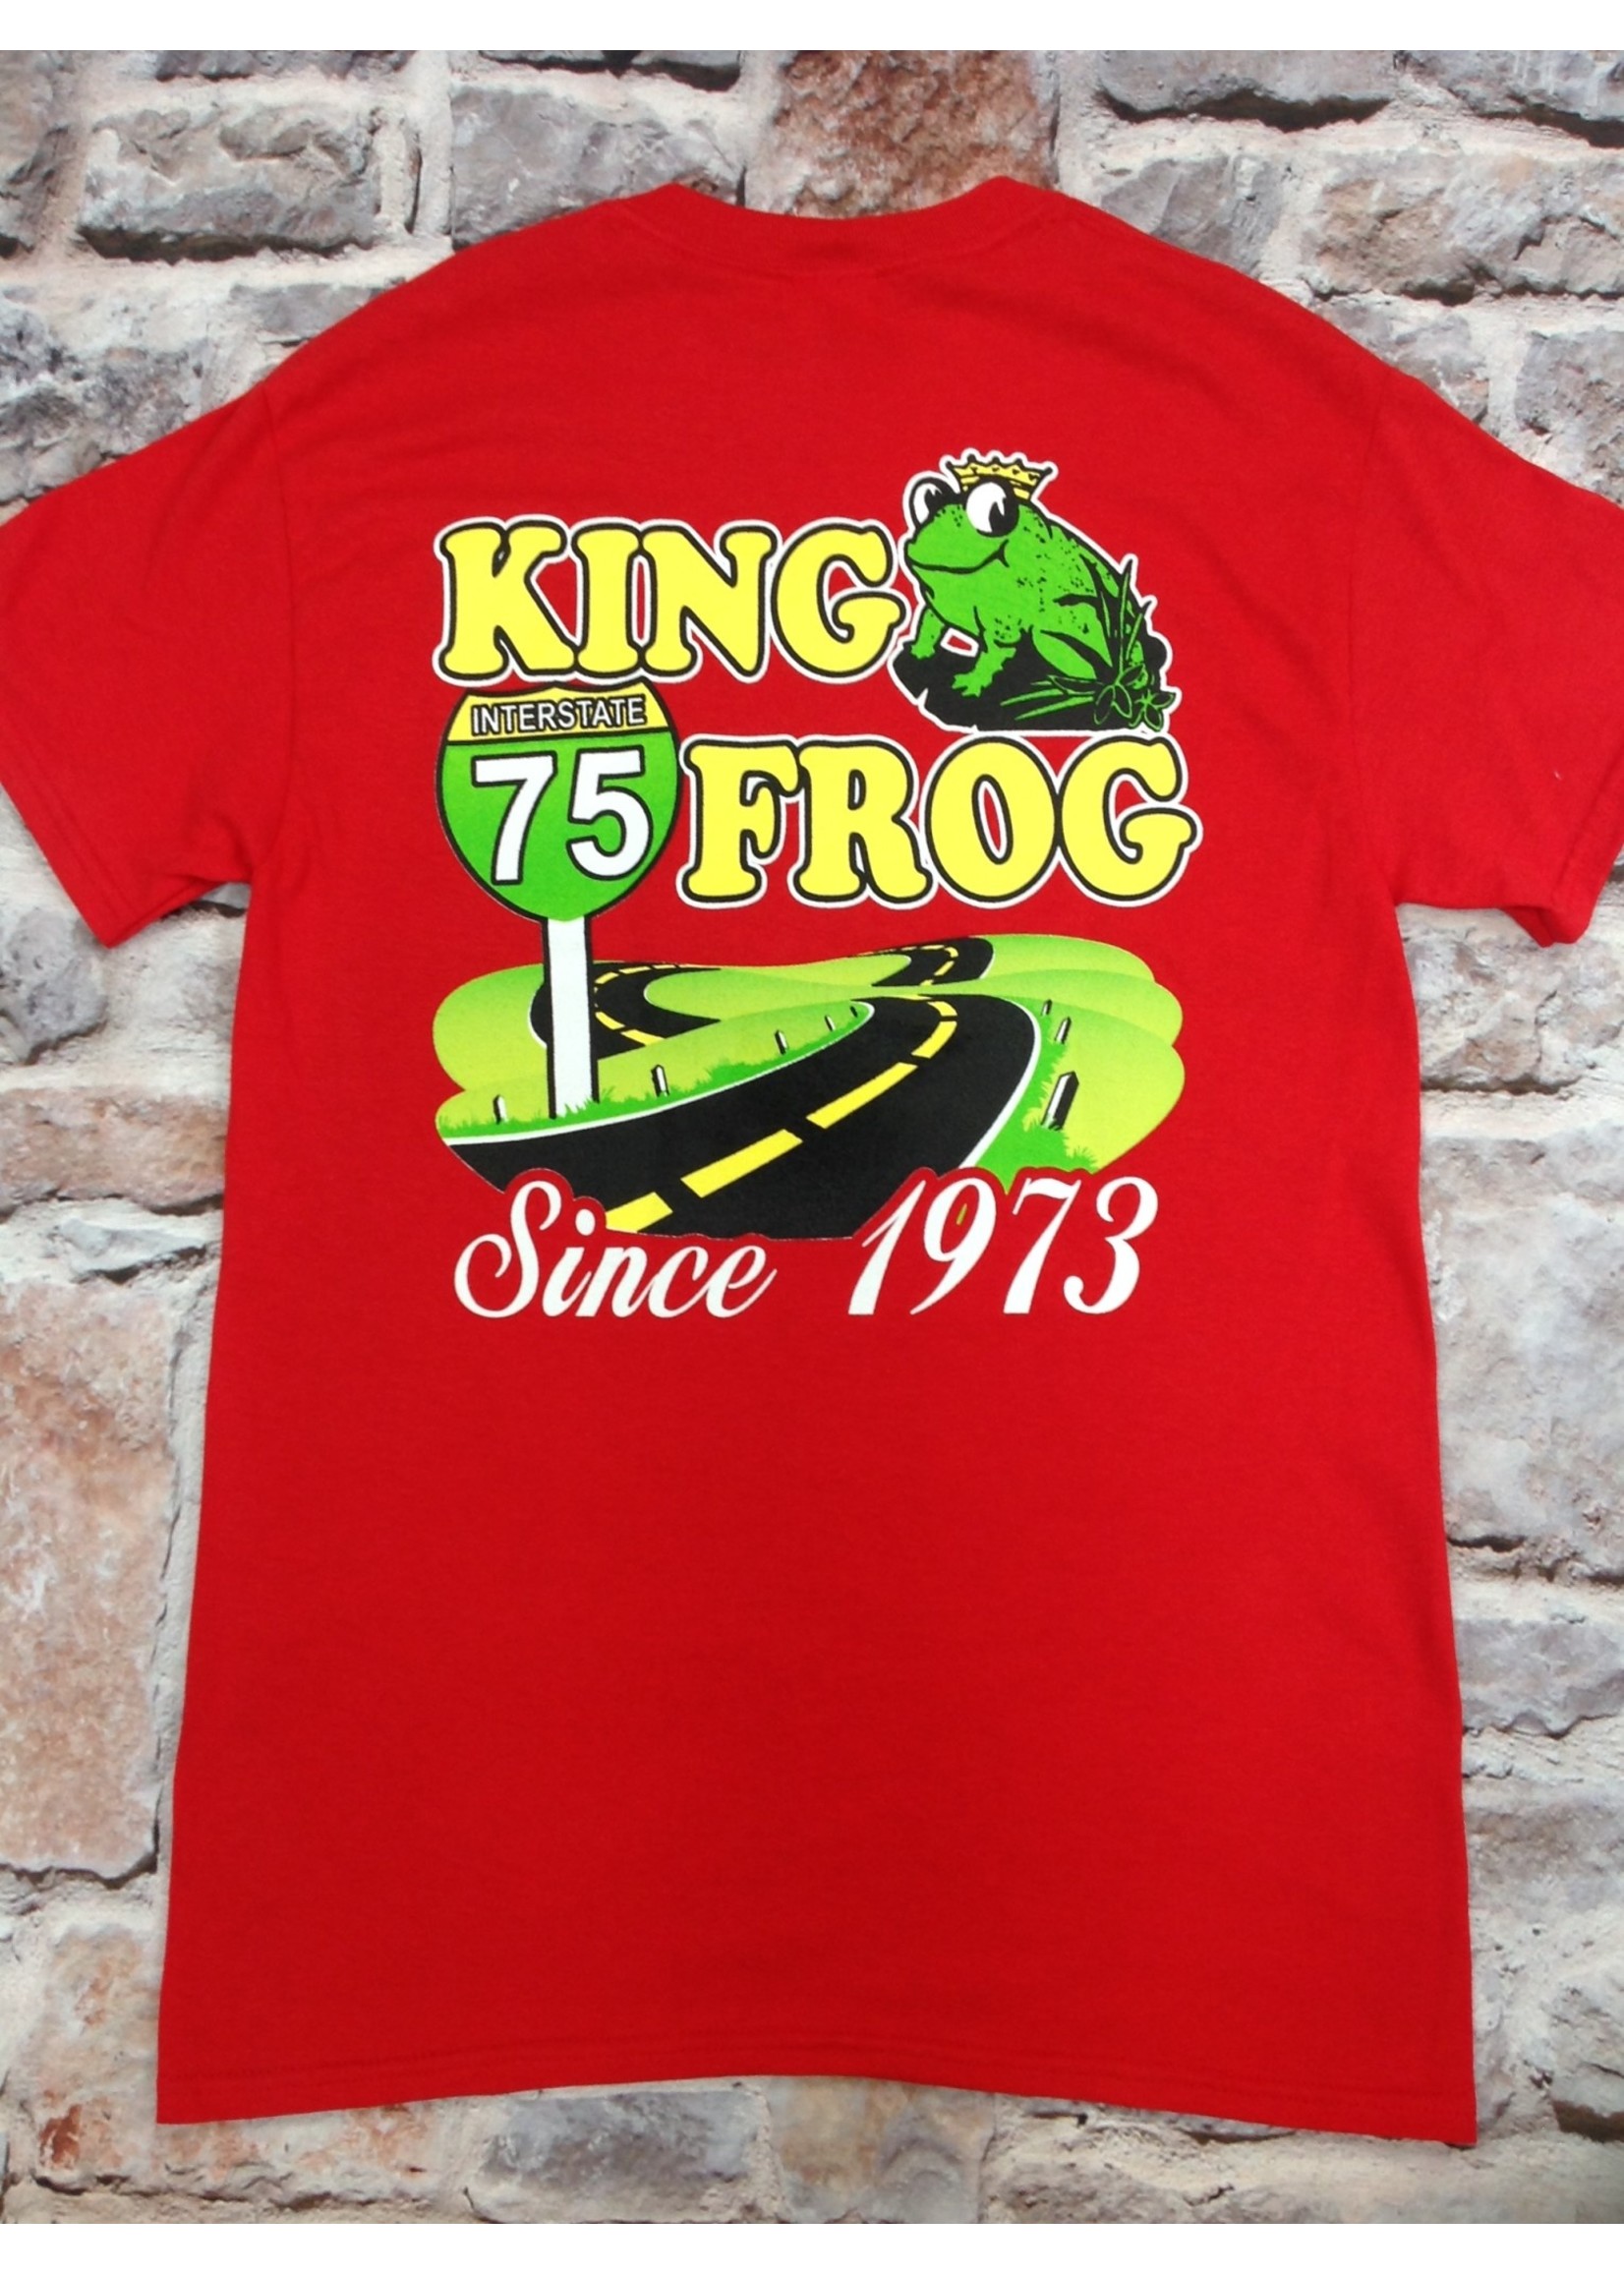 King Frog and Lilypad T-shirt